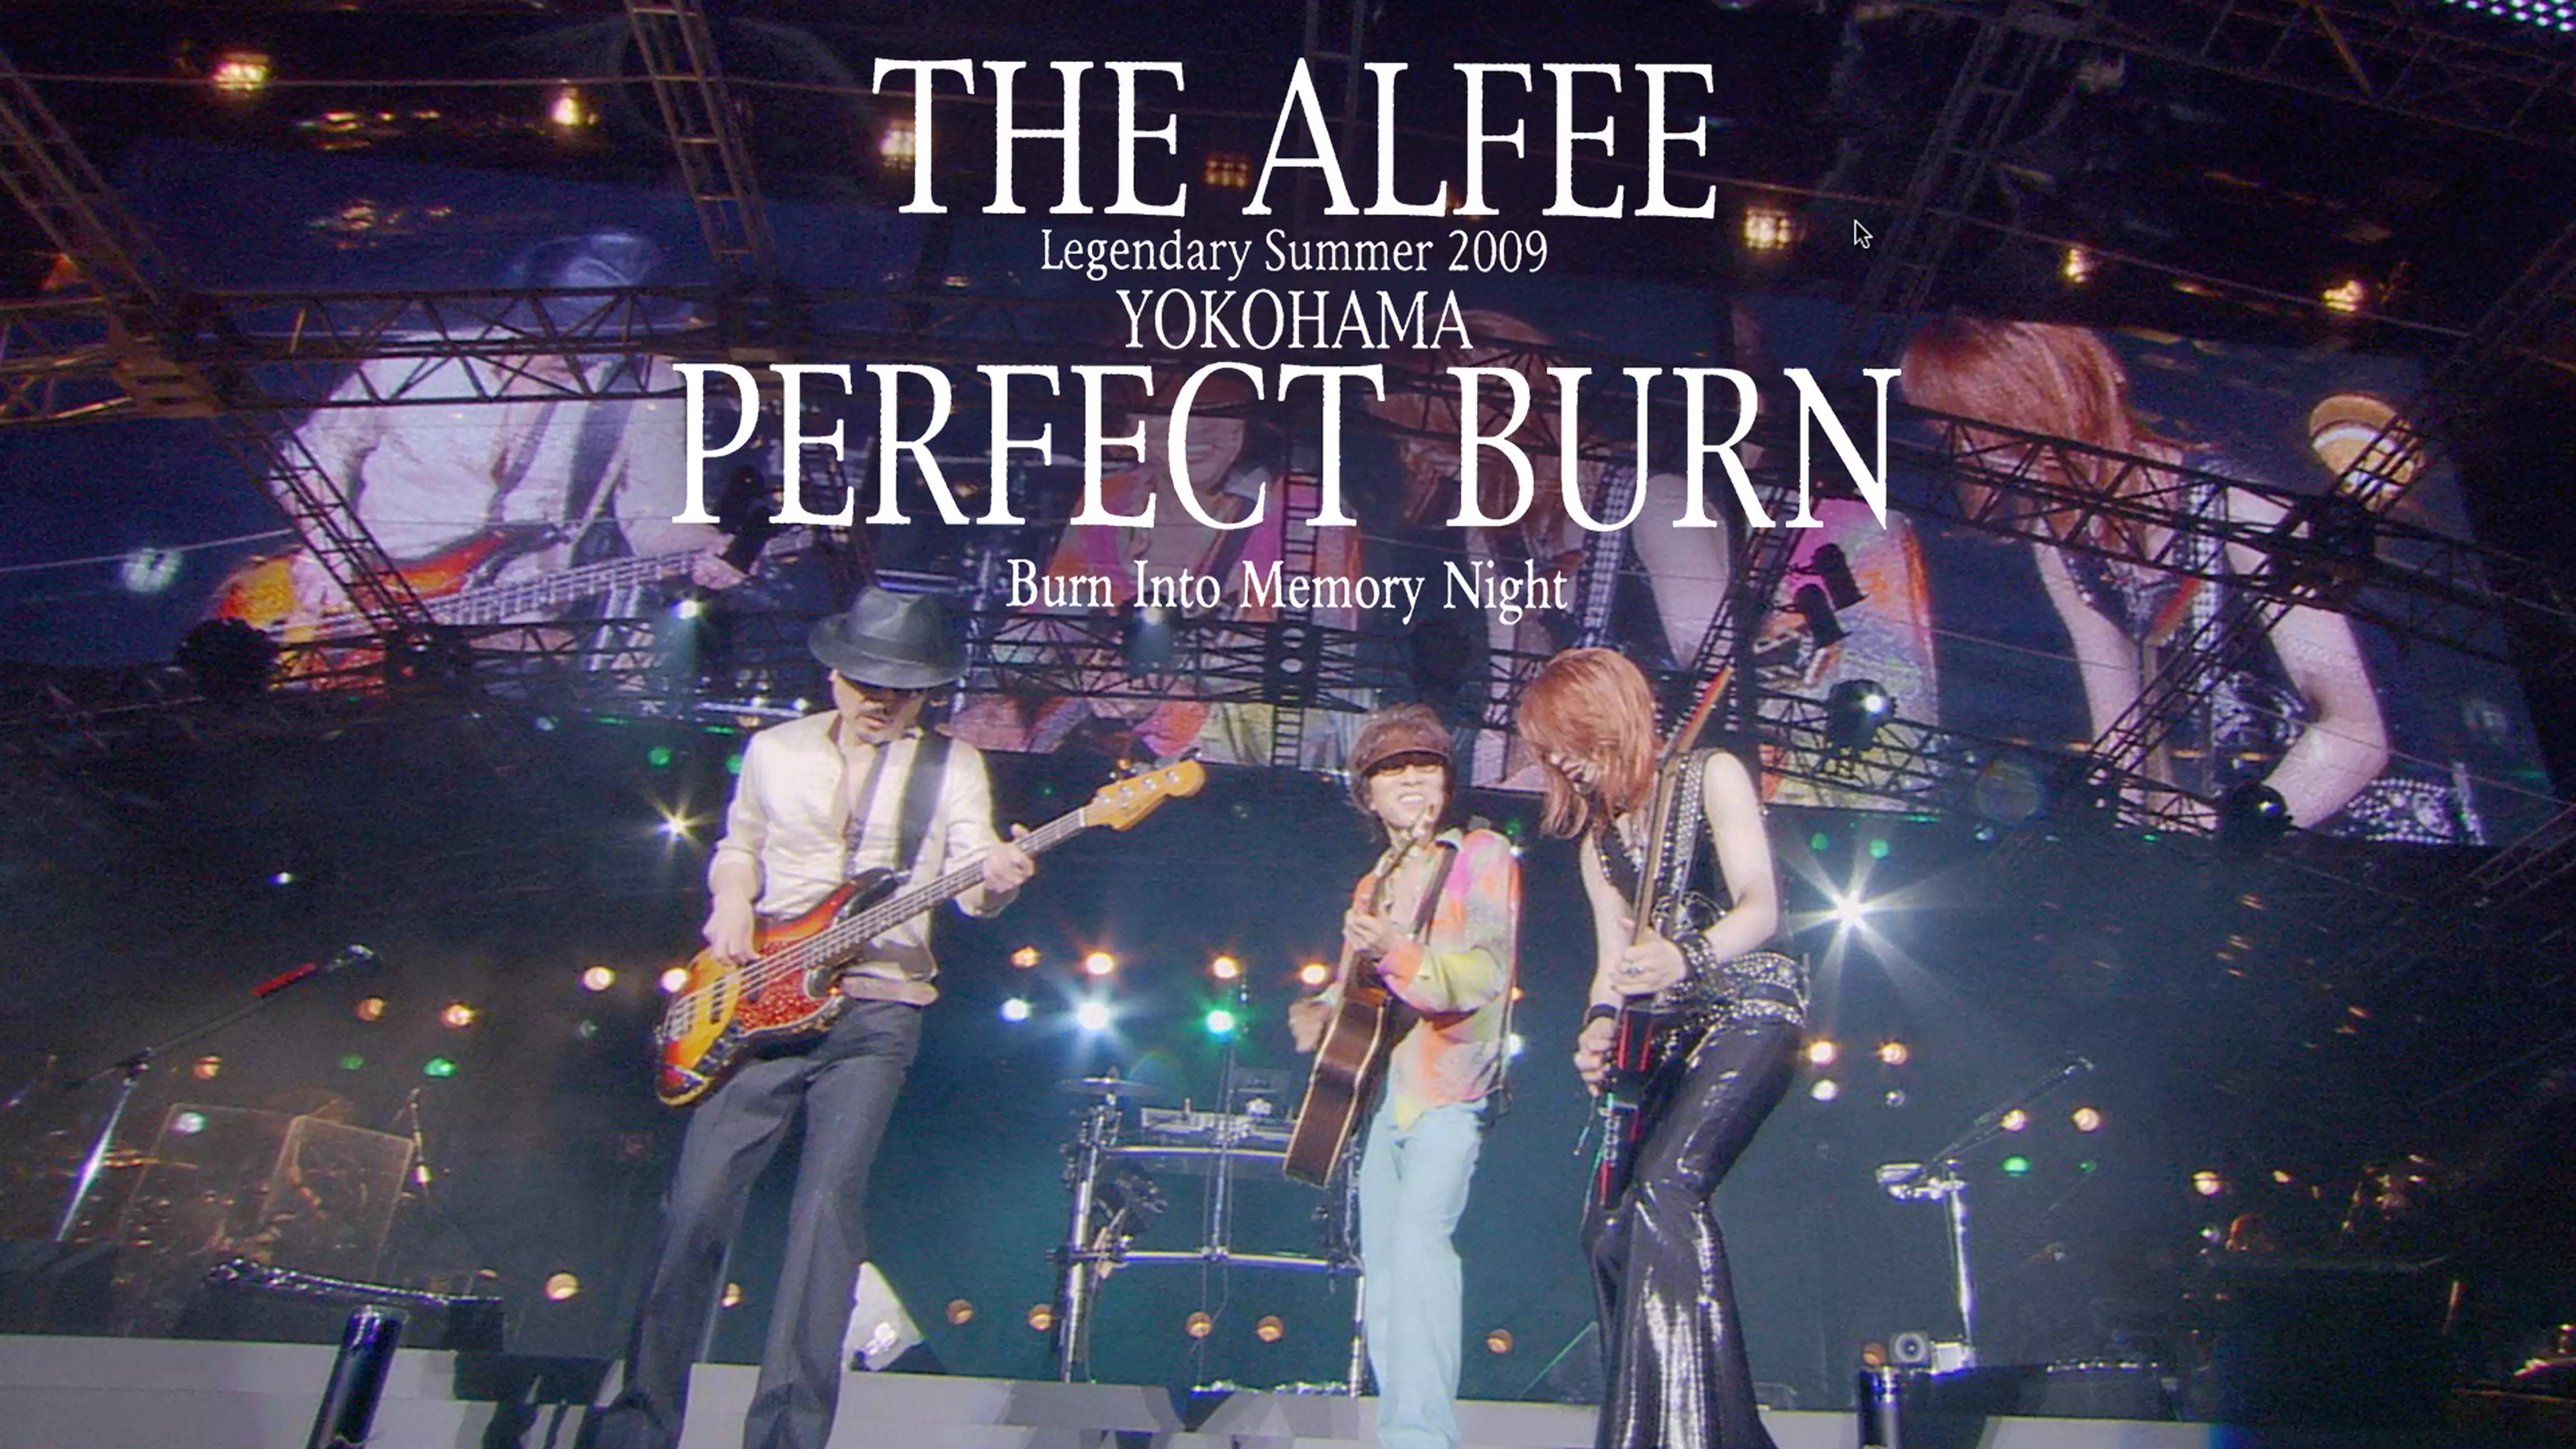 "THE ALFEE Legendary Summer 2009 YOKOHAMA PERFECT BURN Burn Into Memory Night"